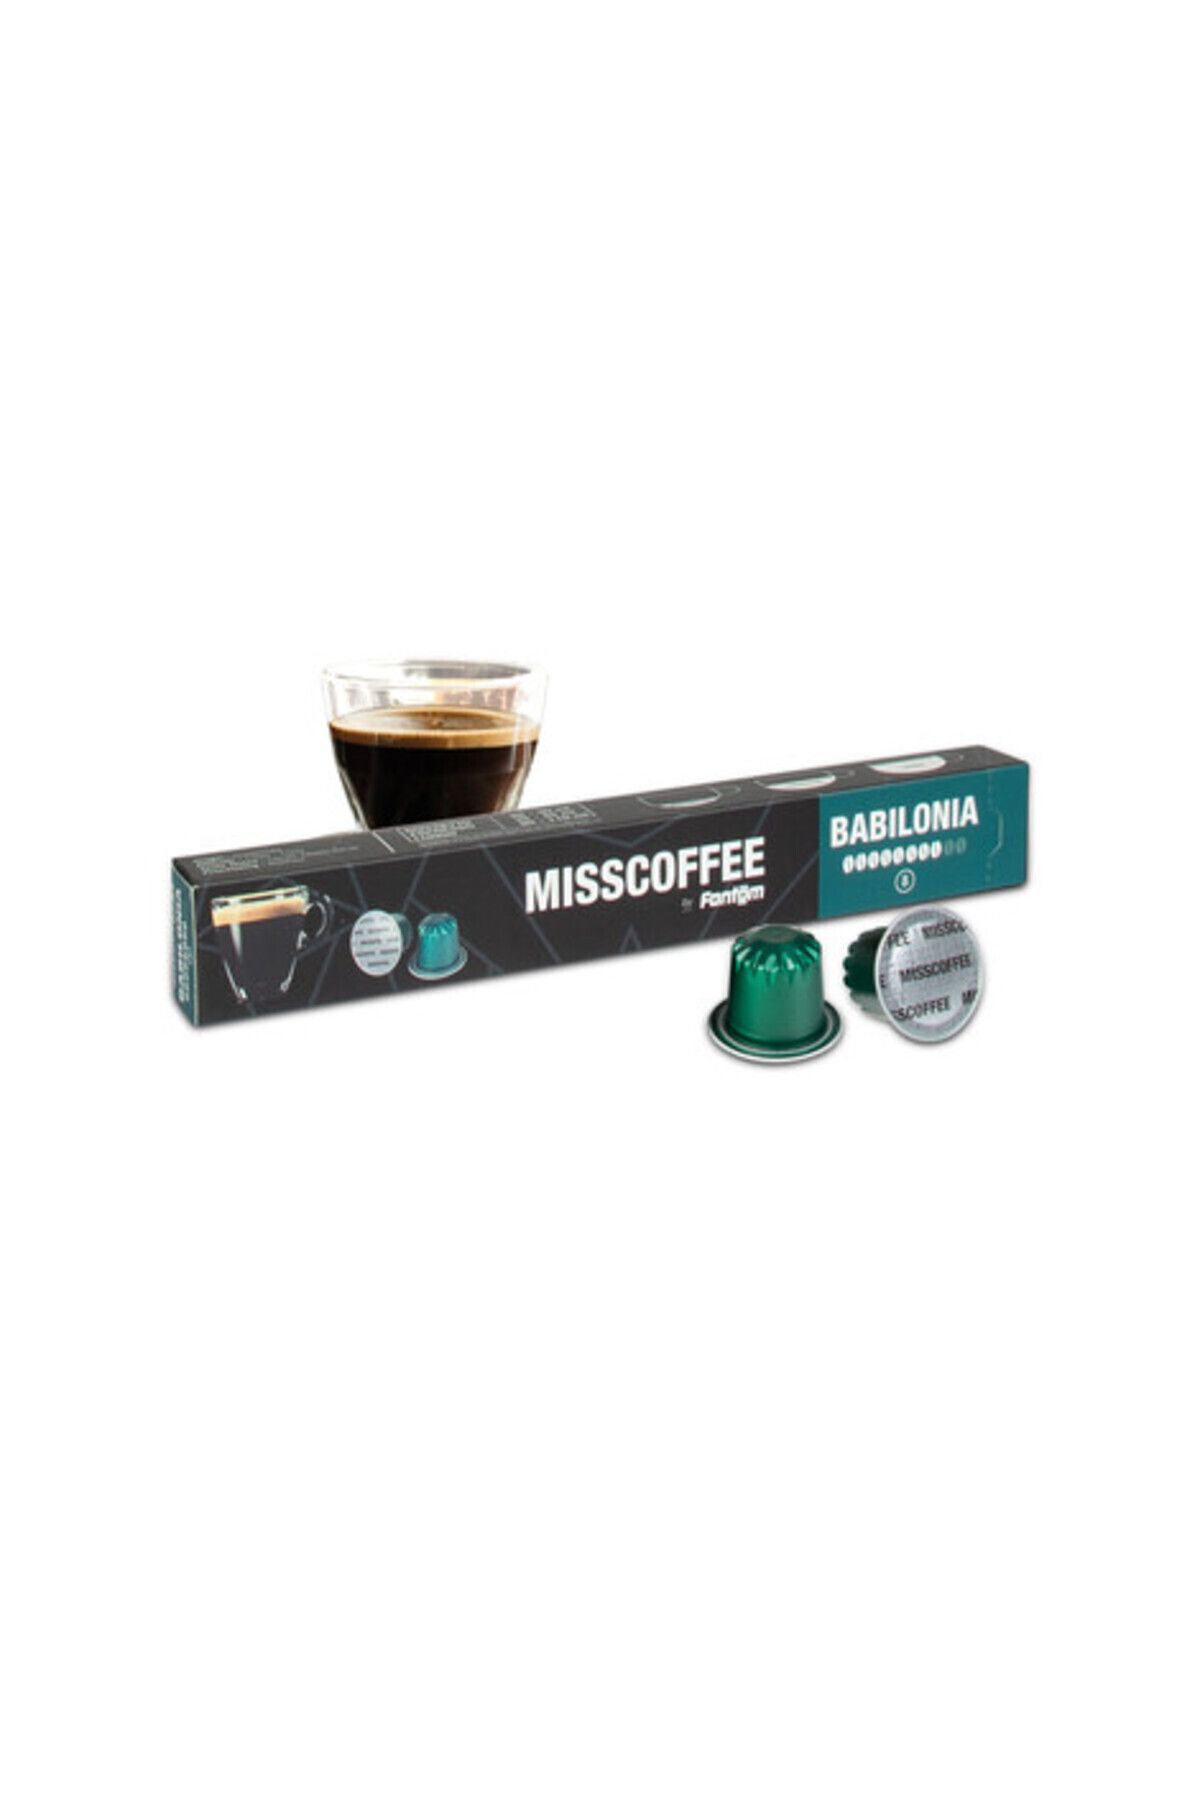 FANTOM Mısscoffee Babılonıa Kapsül Kahve Kutusu Nespresso Sistem Uyumlu